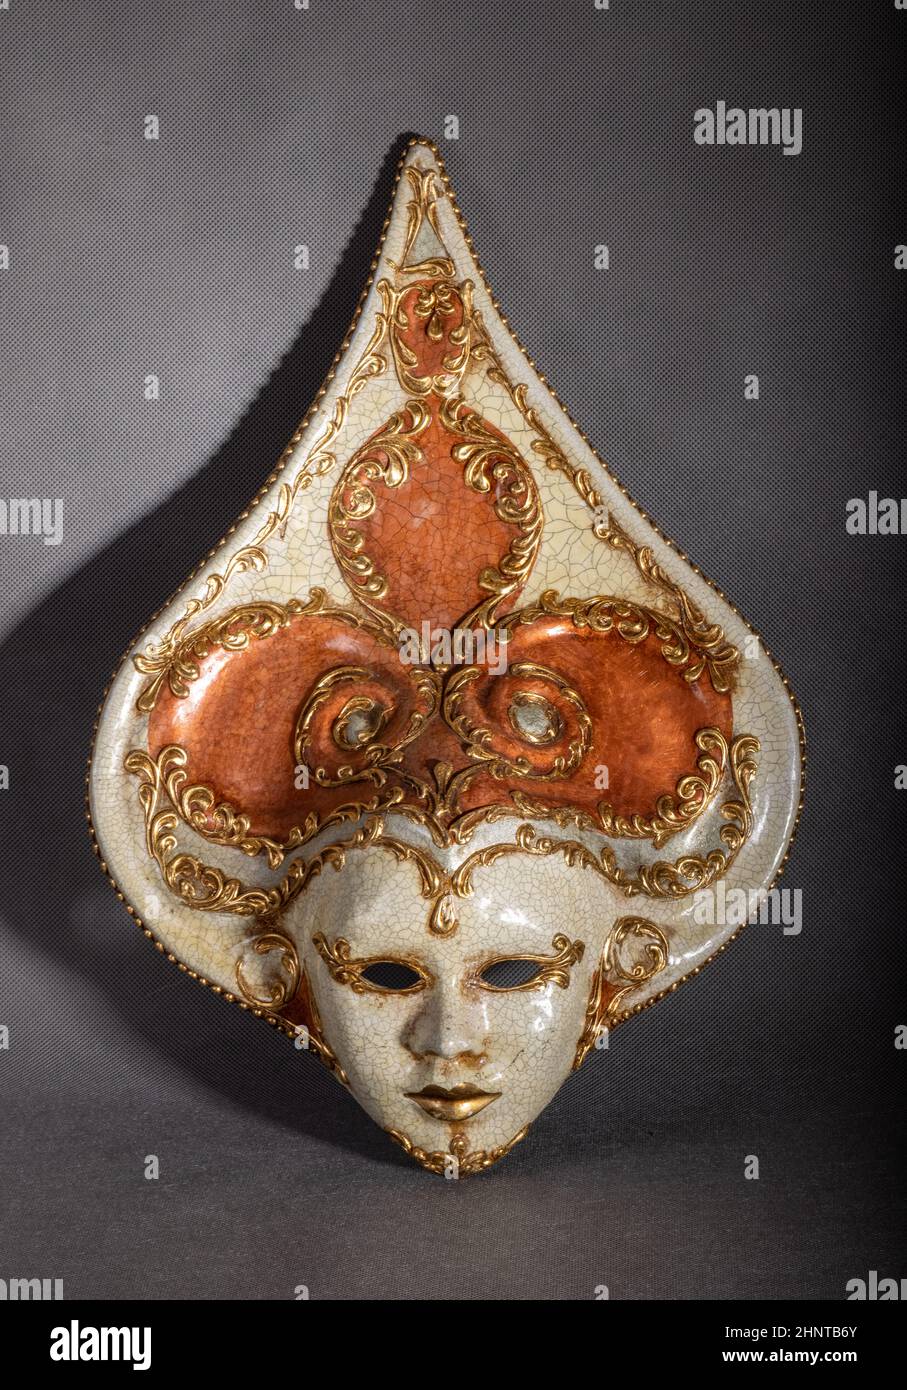 Traditional venetian carnival mask Stock Photo